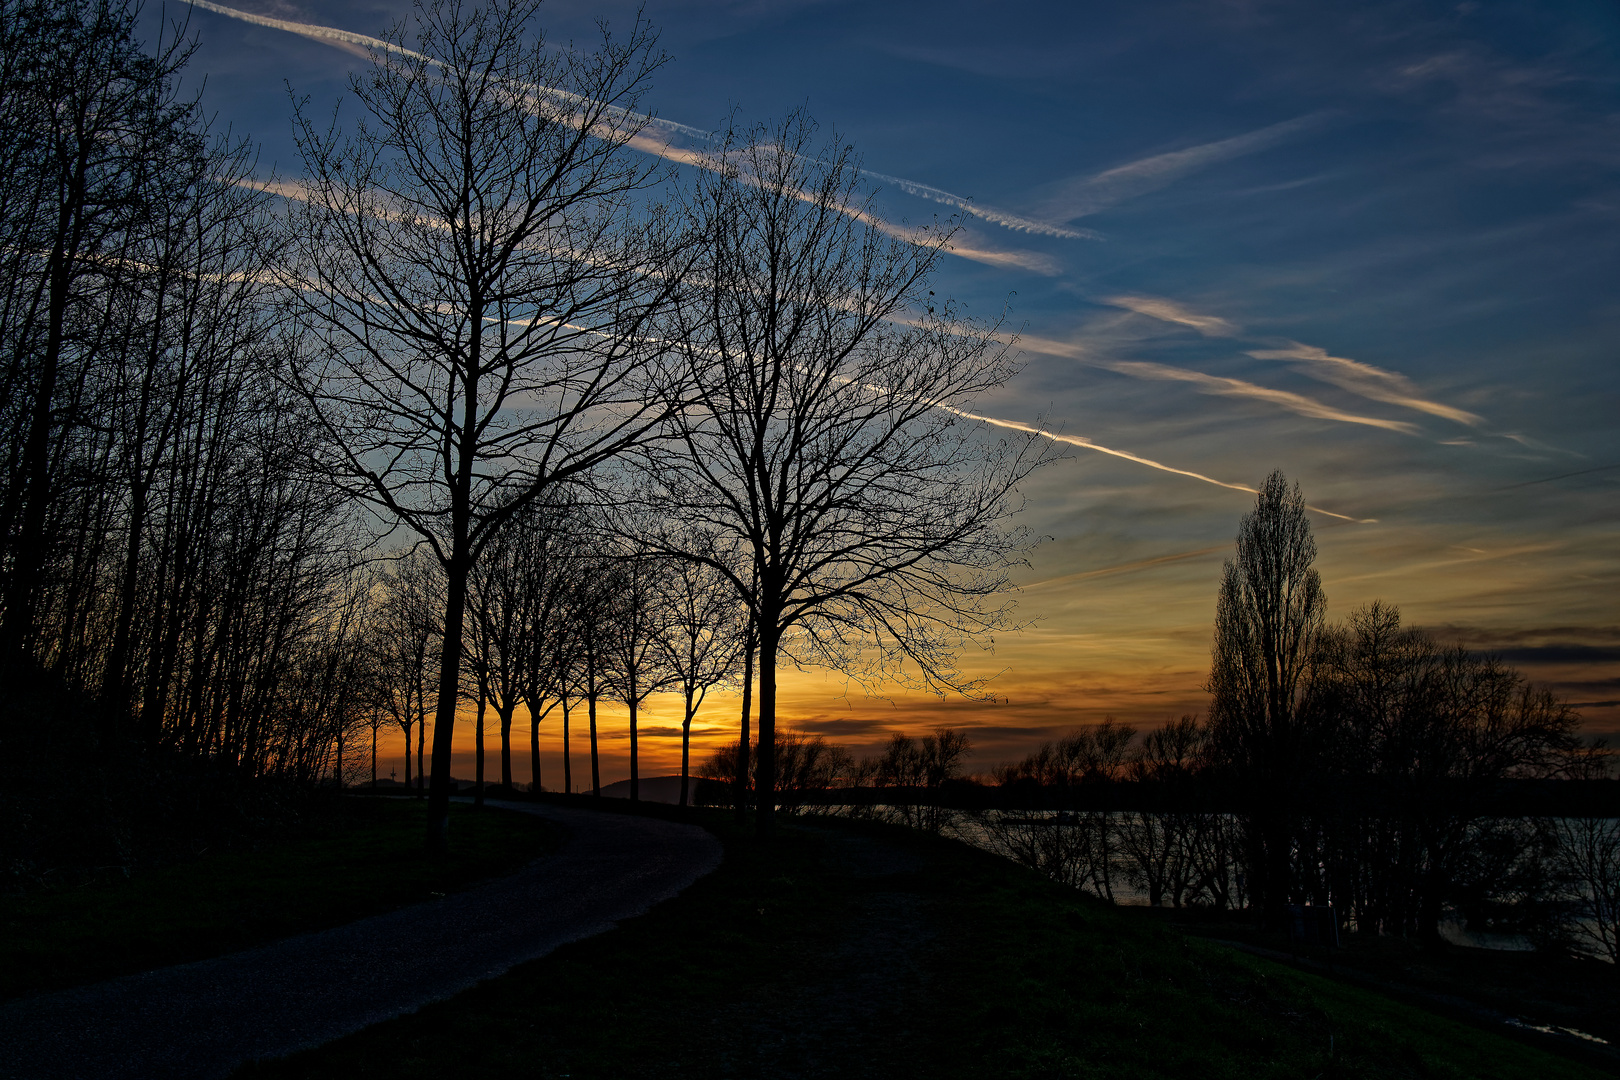 Sonnenuntergang in Duisburg